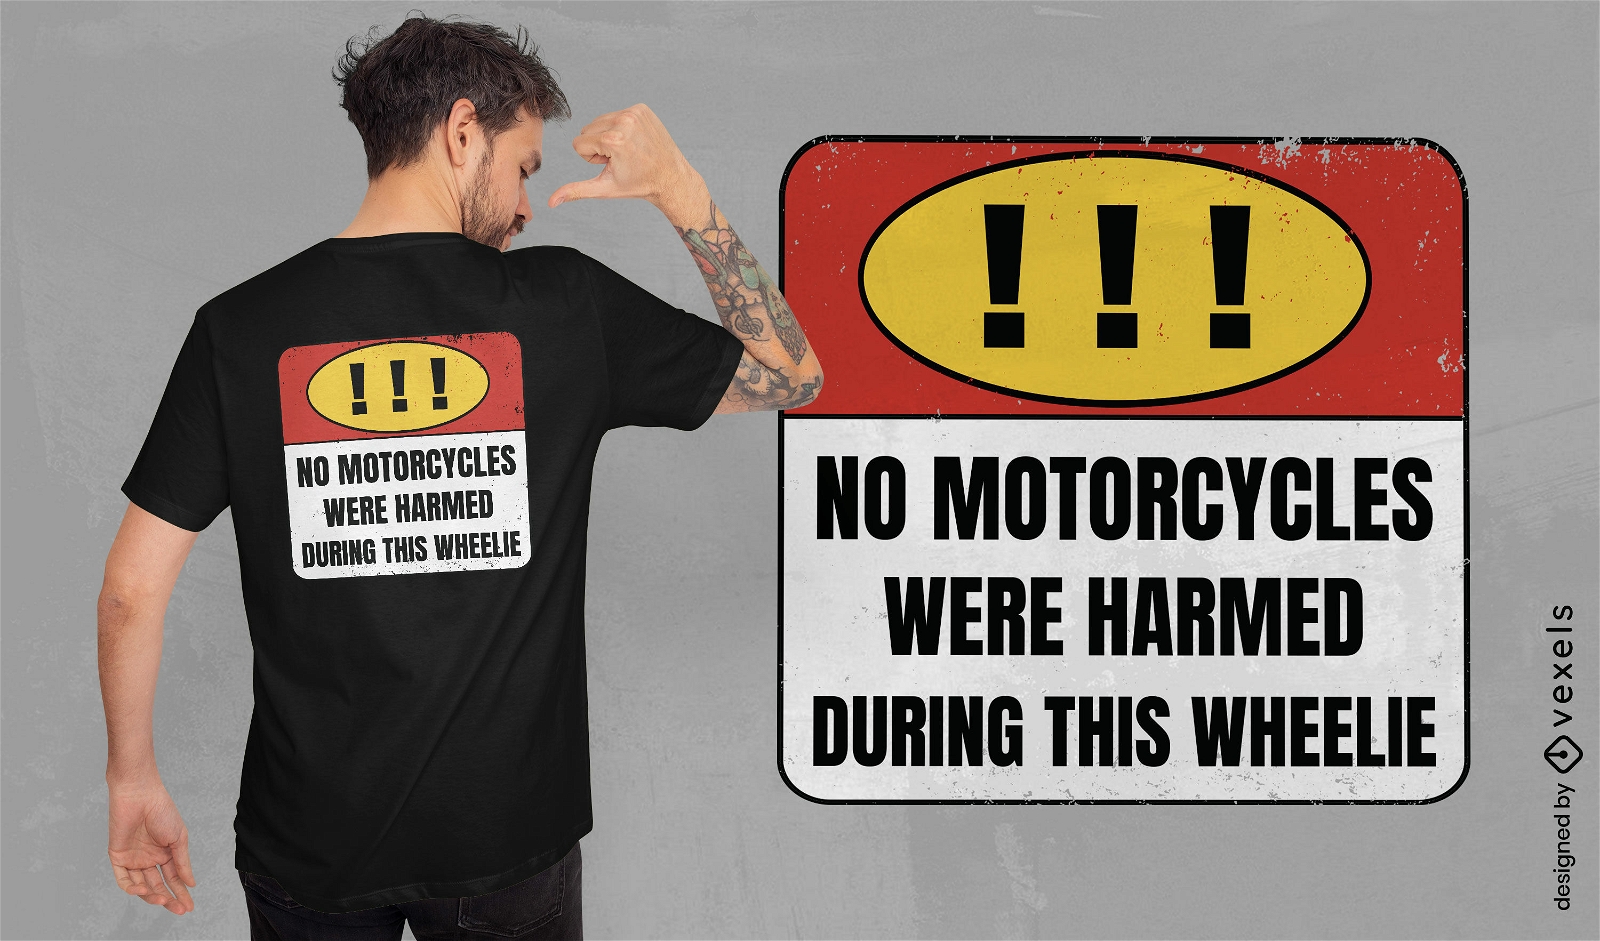 Funny motorcycle warning sign t-shirt design